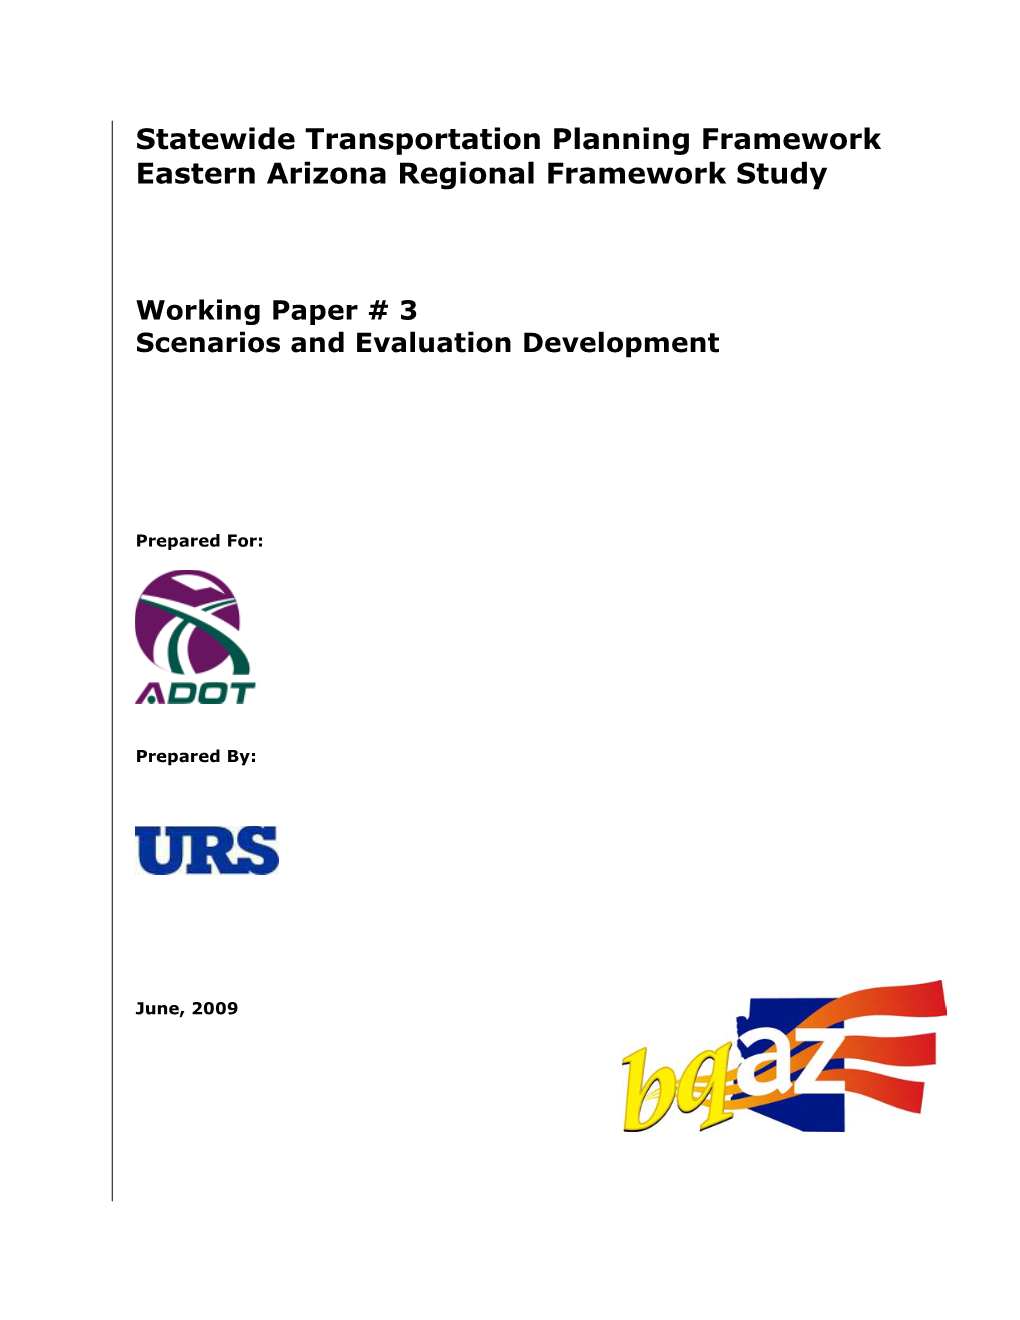 Statewide Transportation Planning Framework Eastern Arizona Regional Framework Study